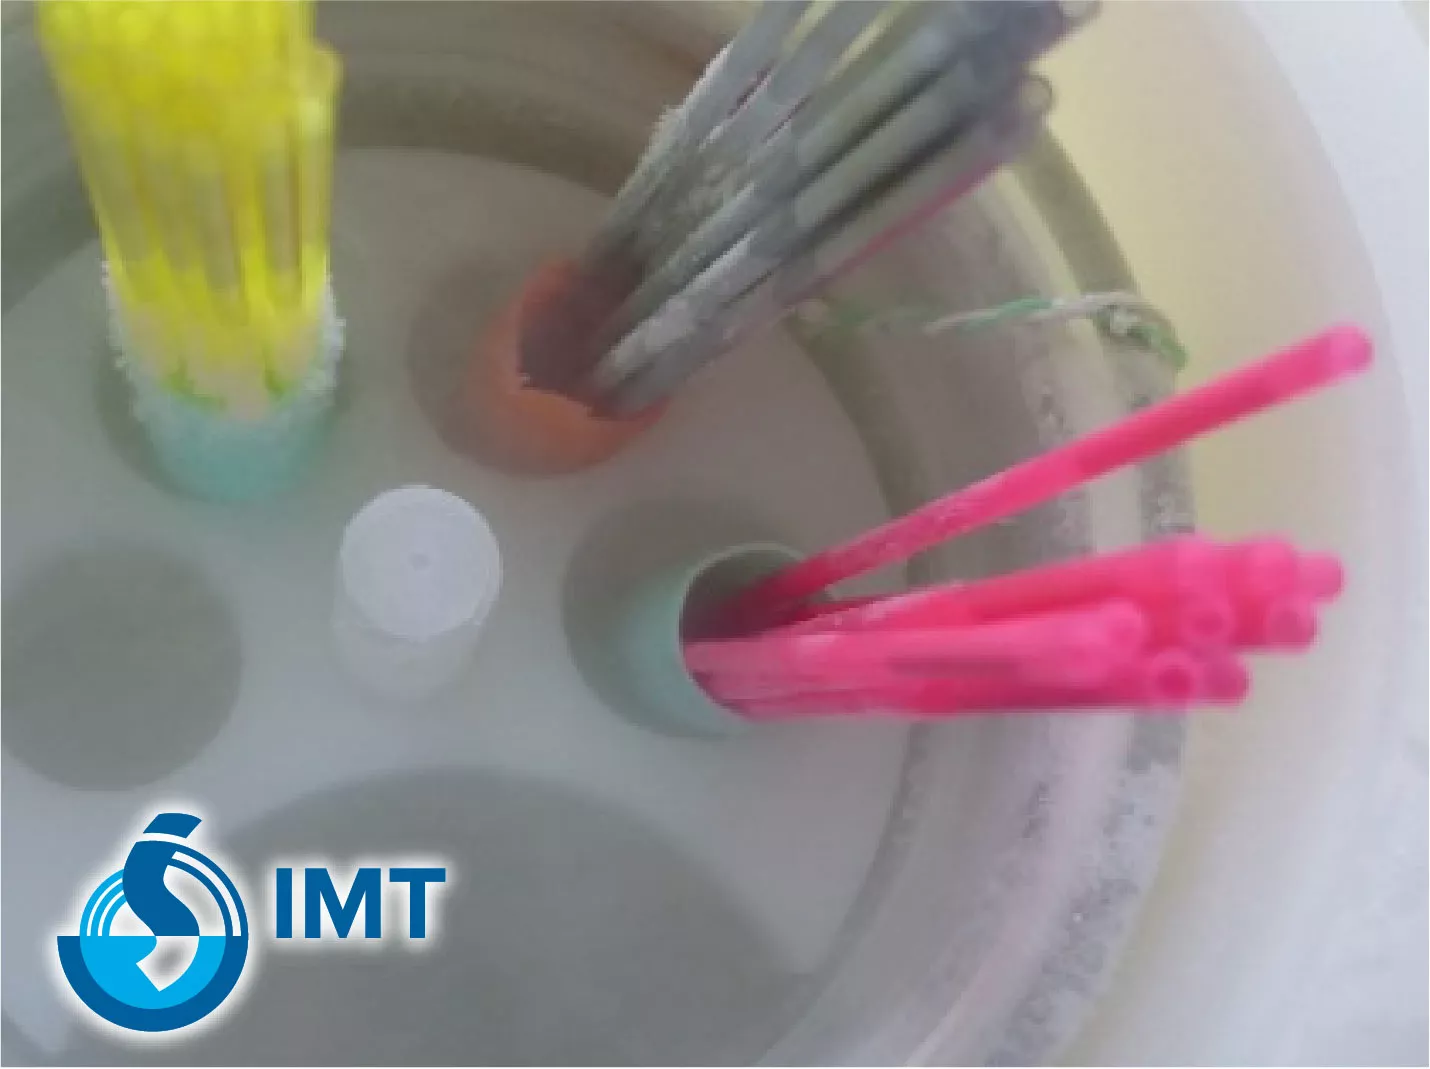 IMT VitMaster IVF Ultra Rapid Vitrification System